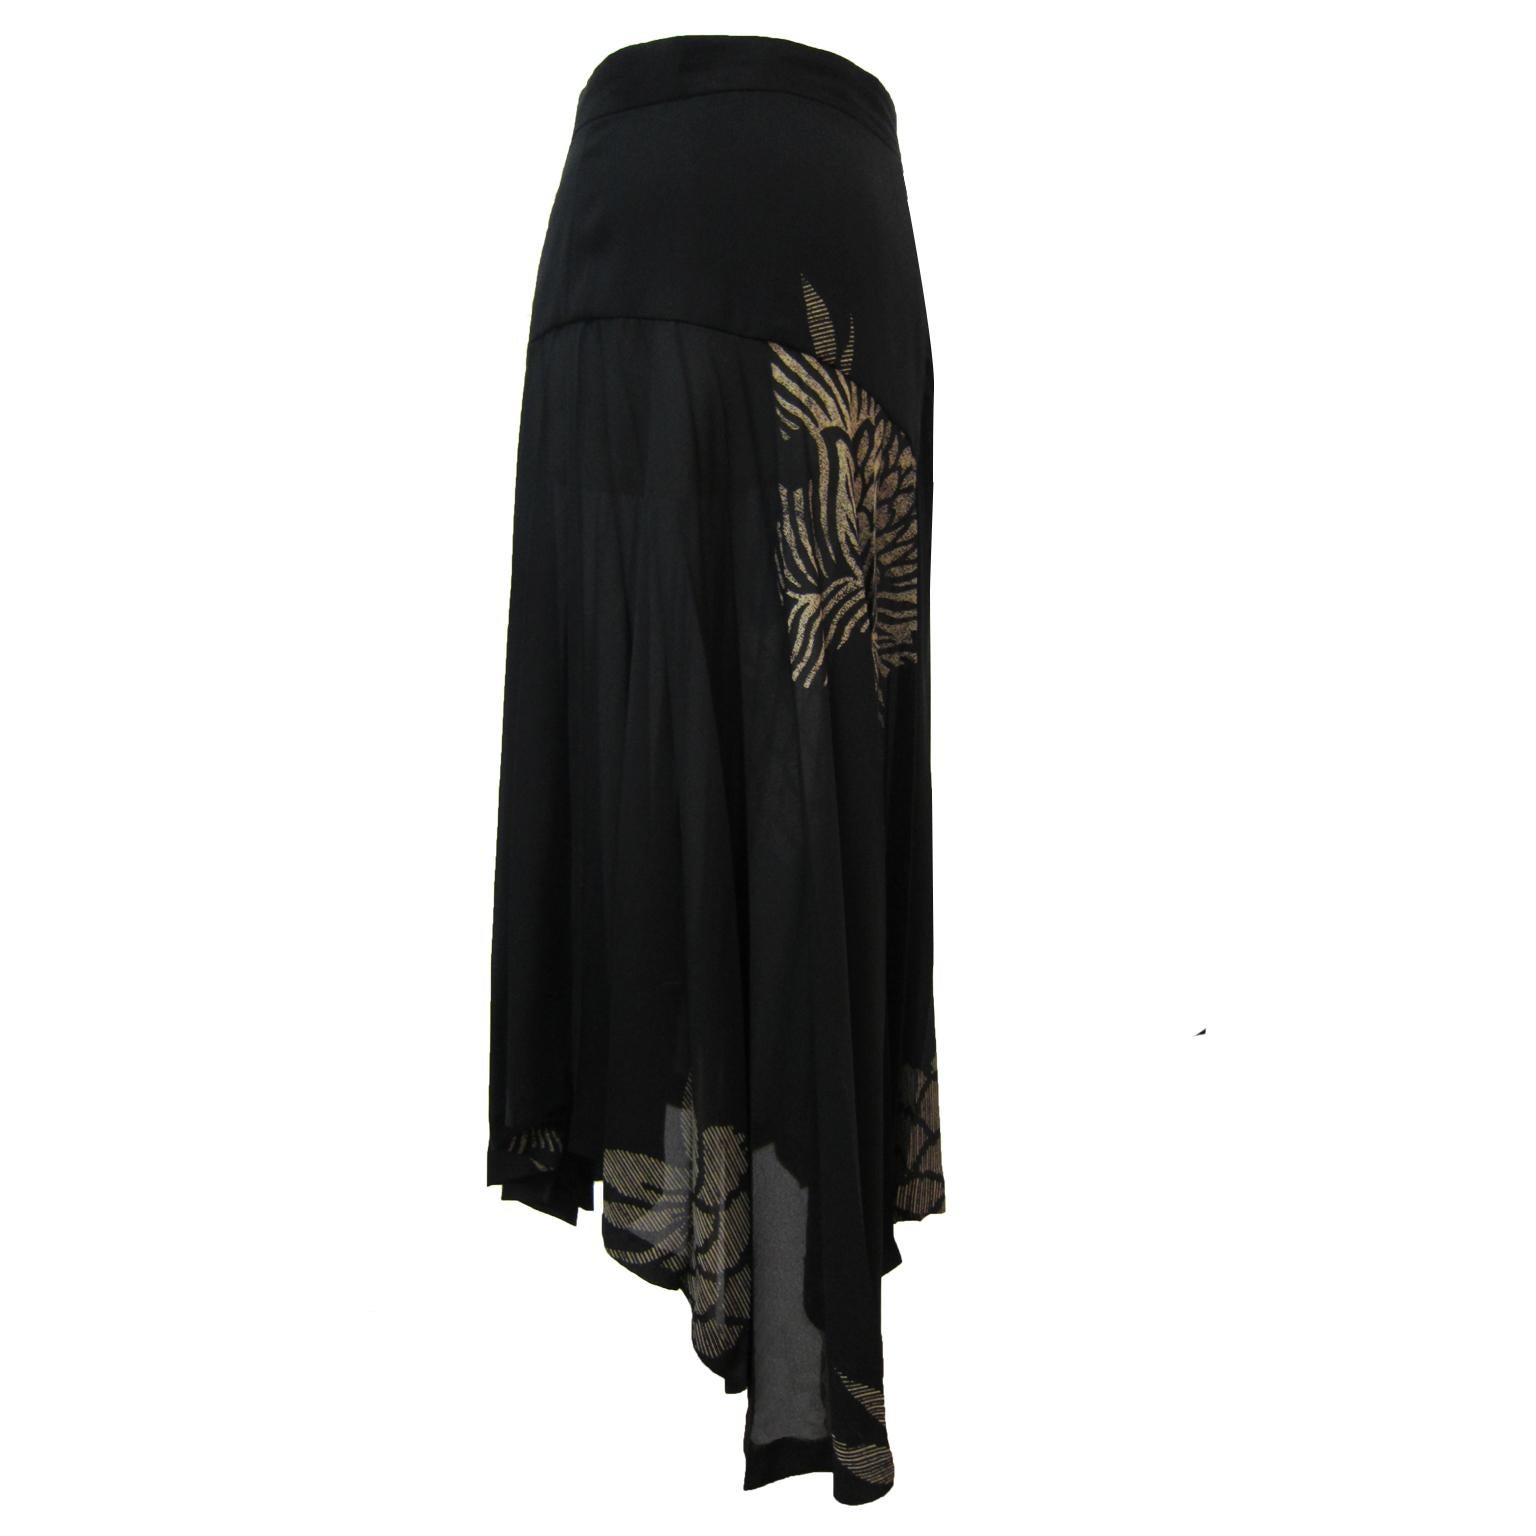 Comme des Garcons irregular /  asymmetric pleated skirt from AD 1992. 
Measurements : 
Waist : 60 cm
Length : 90 cm